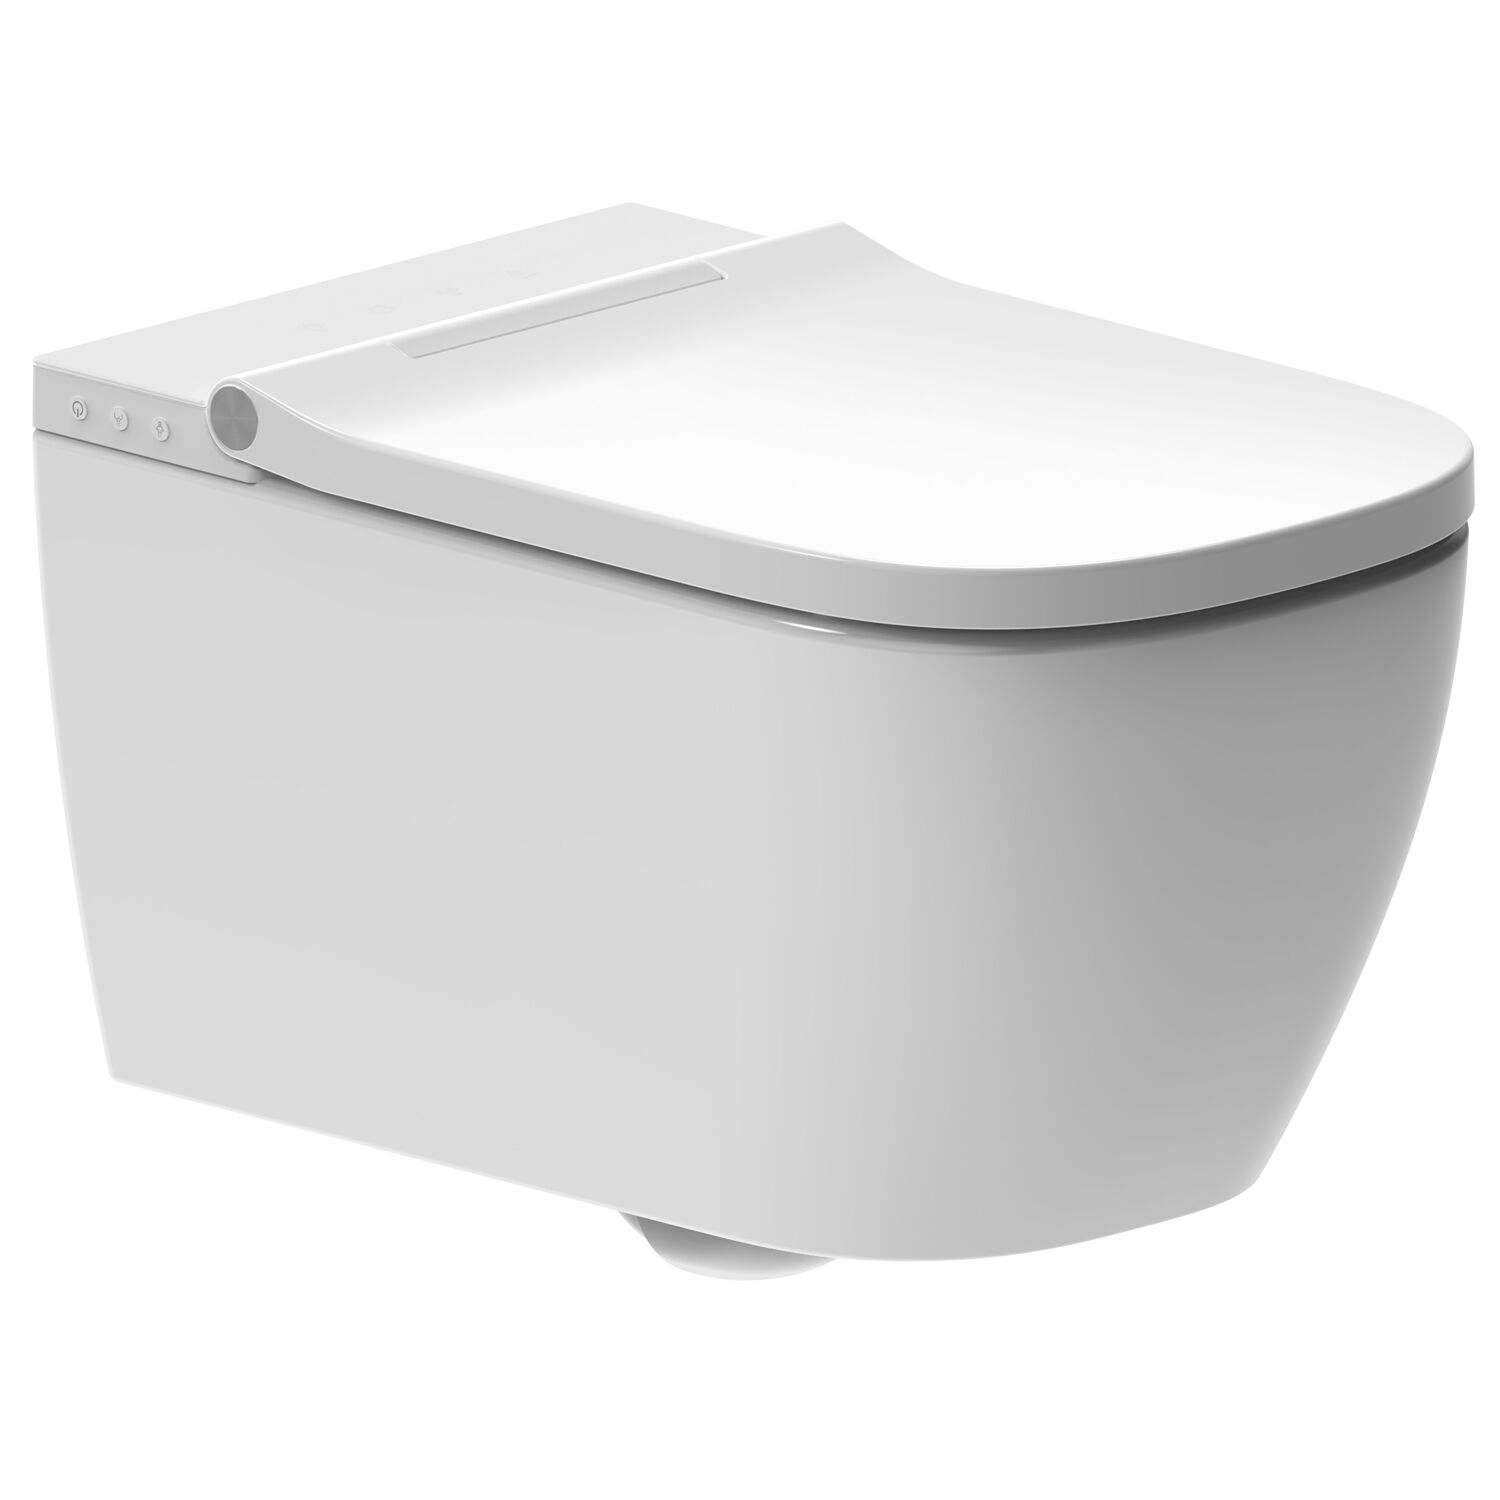 Kirchhoff Dusch WC, mit Bidetfunktion, BadeDu spülrandlos, Absenkautomatik, | Weiß